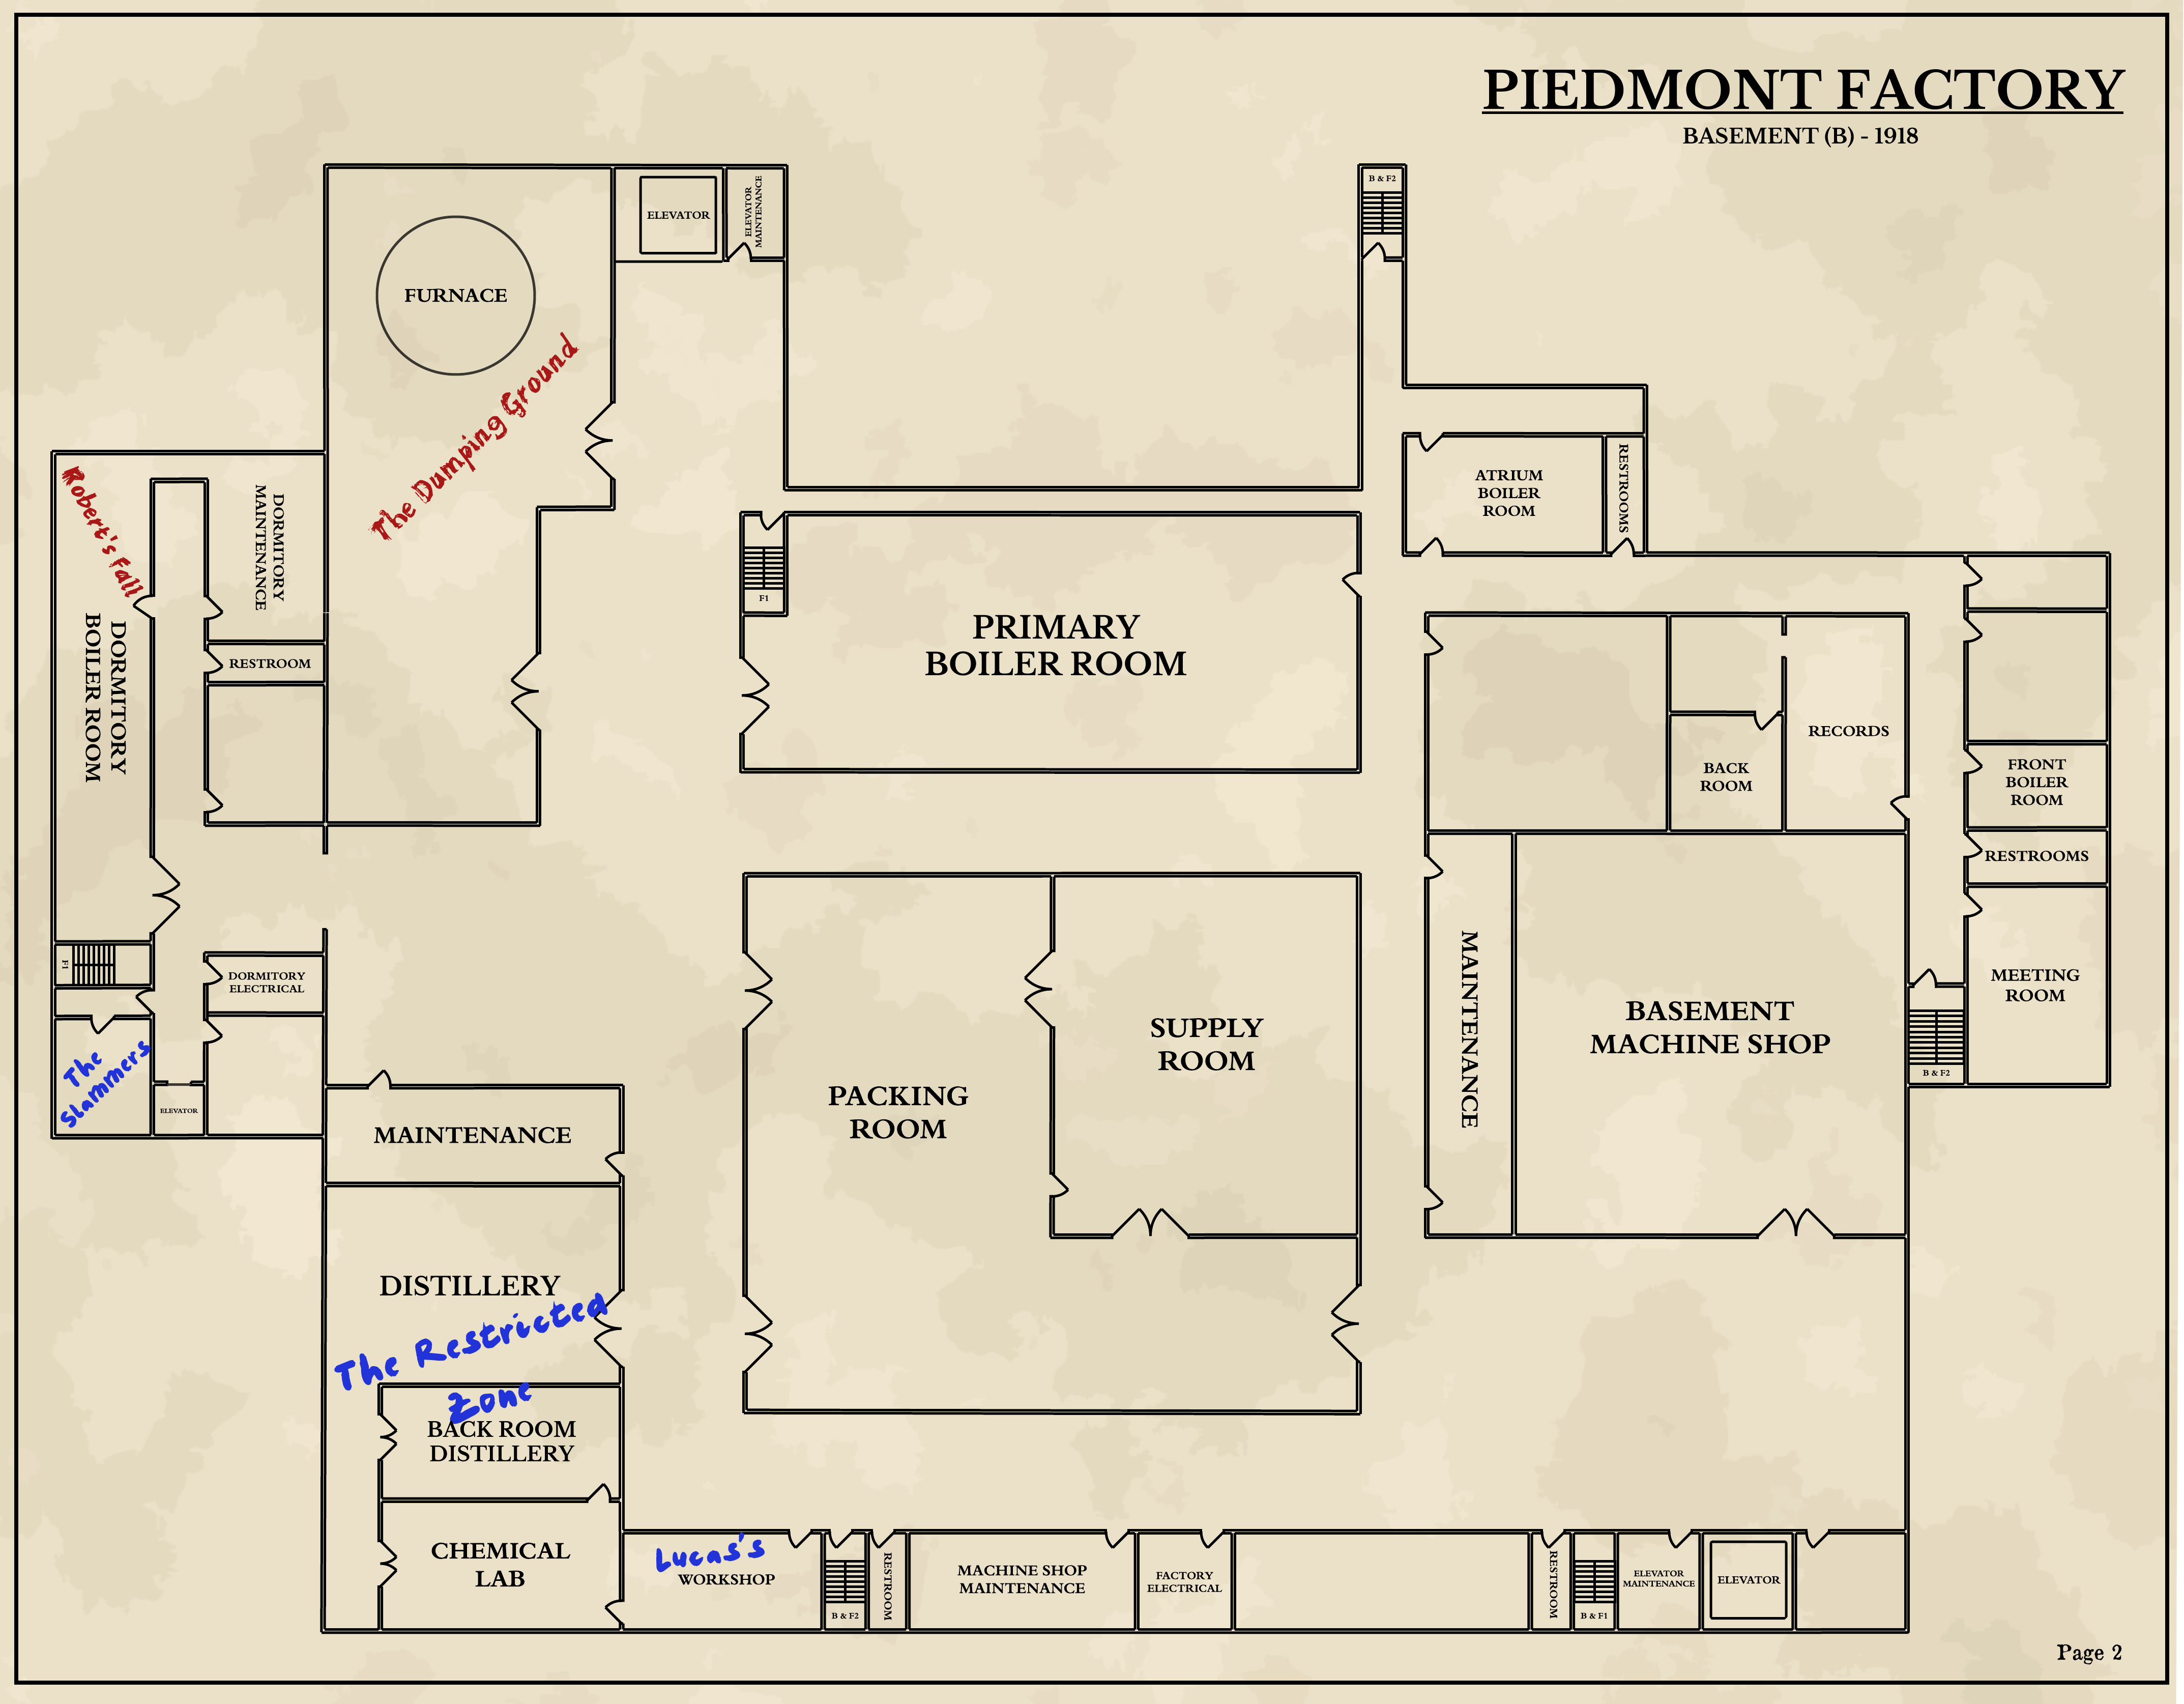 Piedmont Factory: Basement